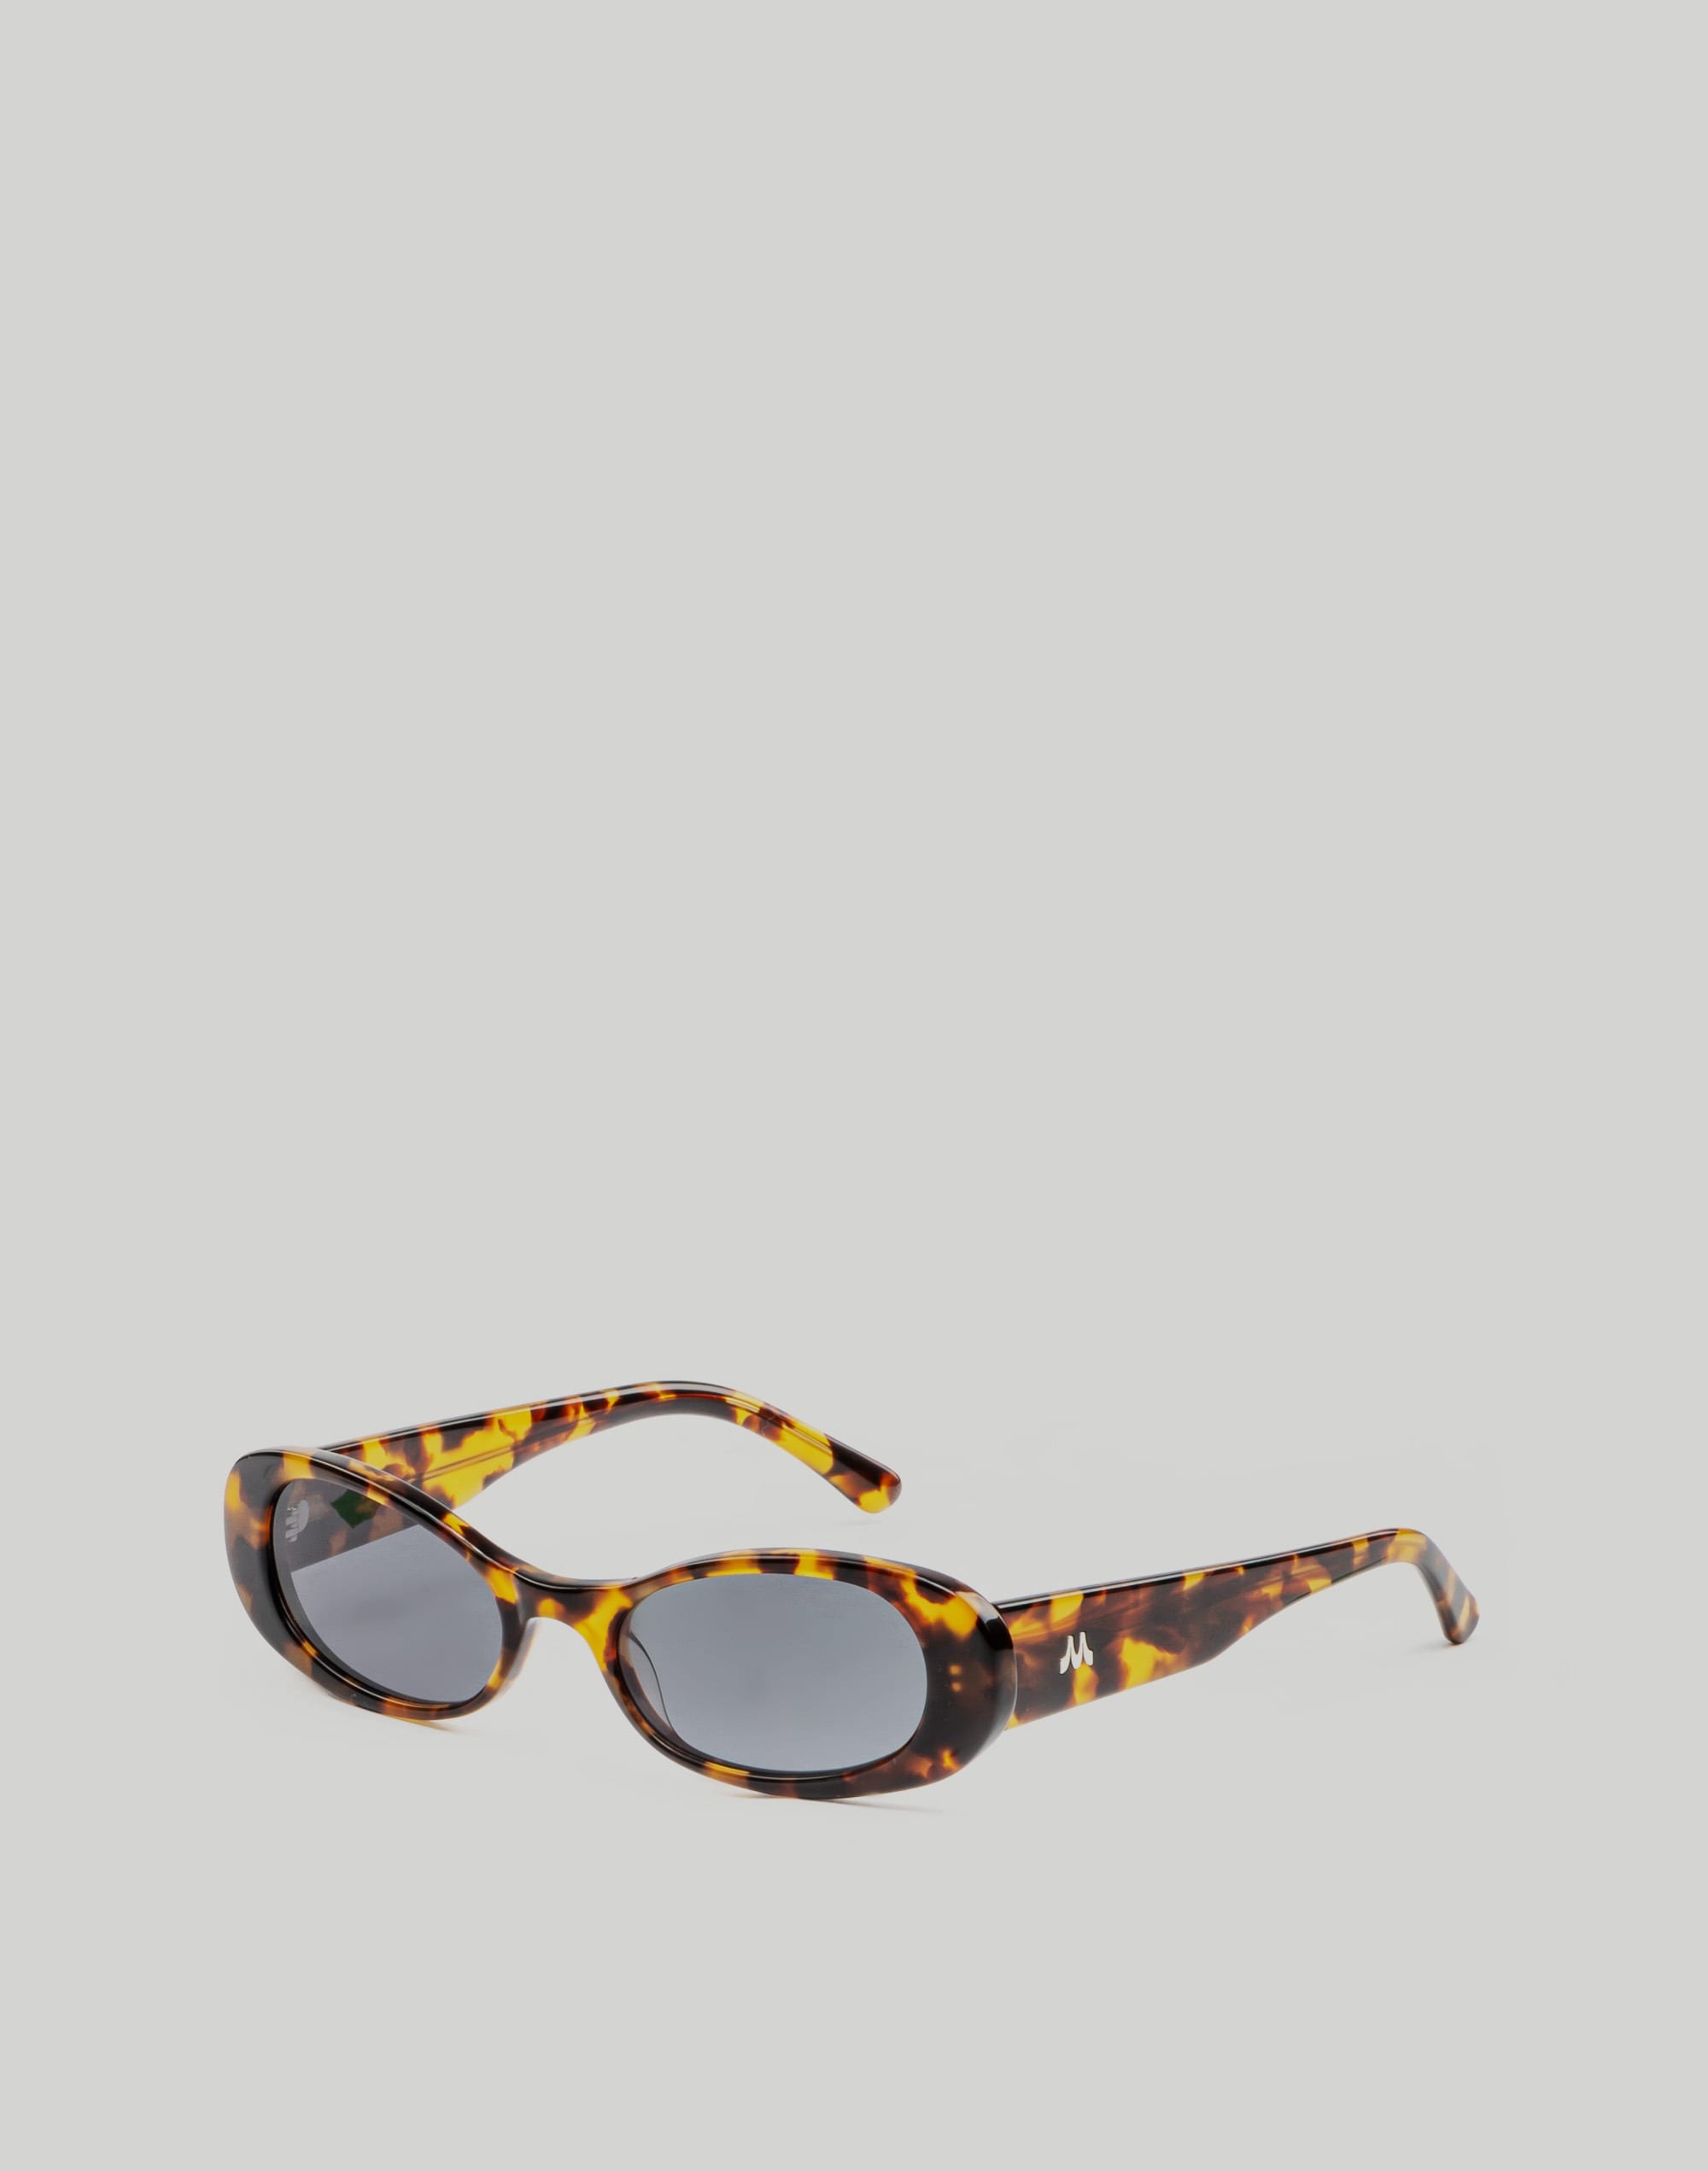 Maguire Brooklyn Tortoise Sunglasses